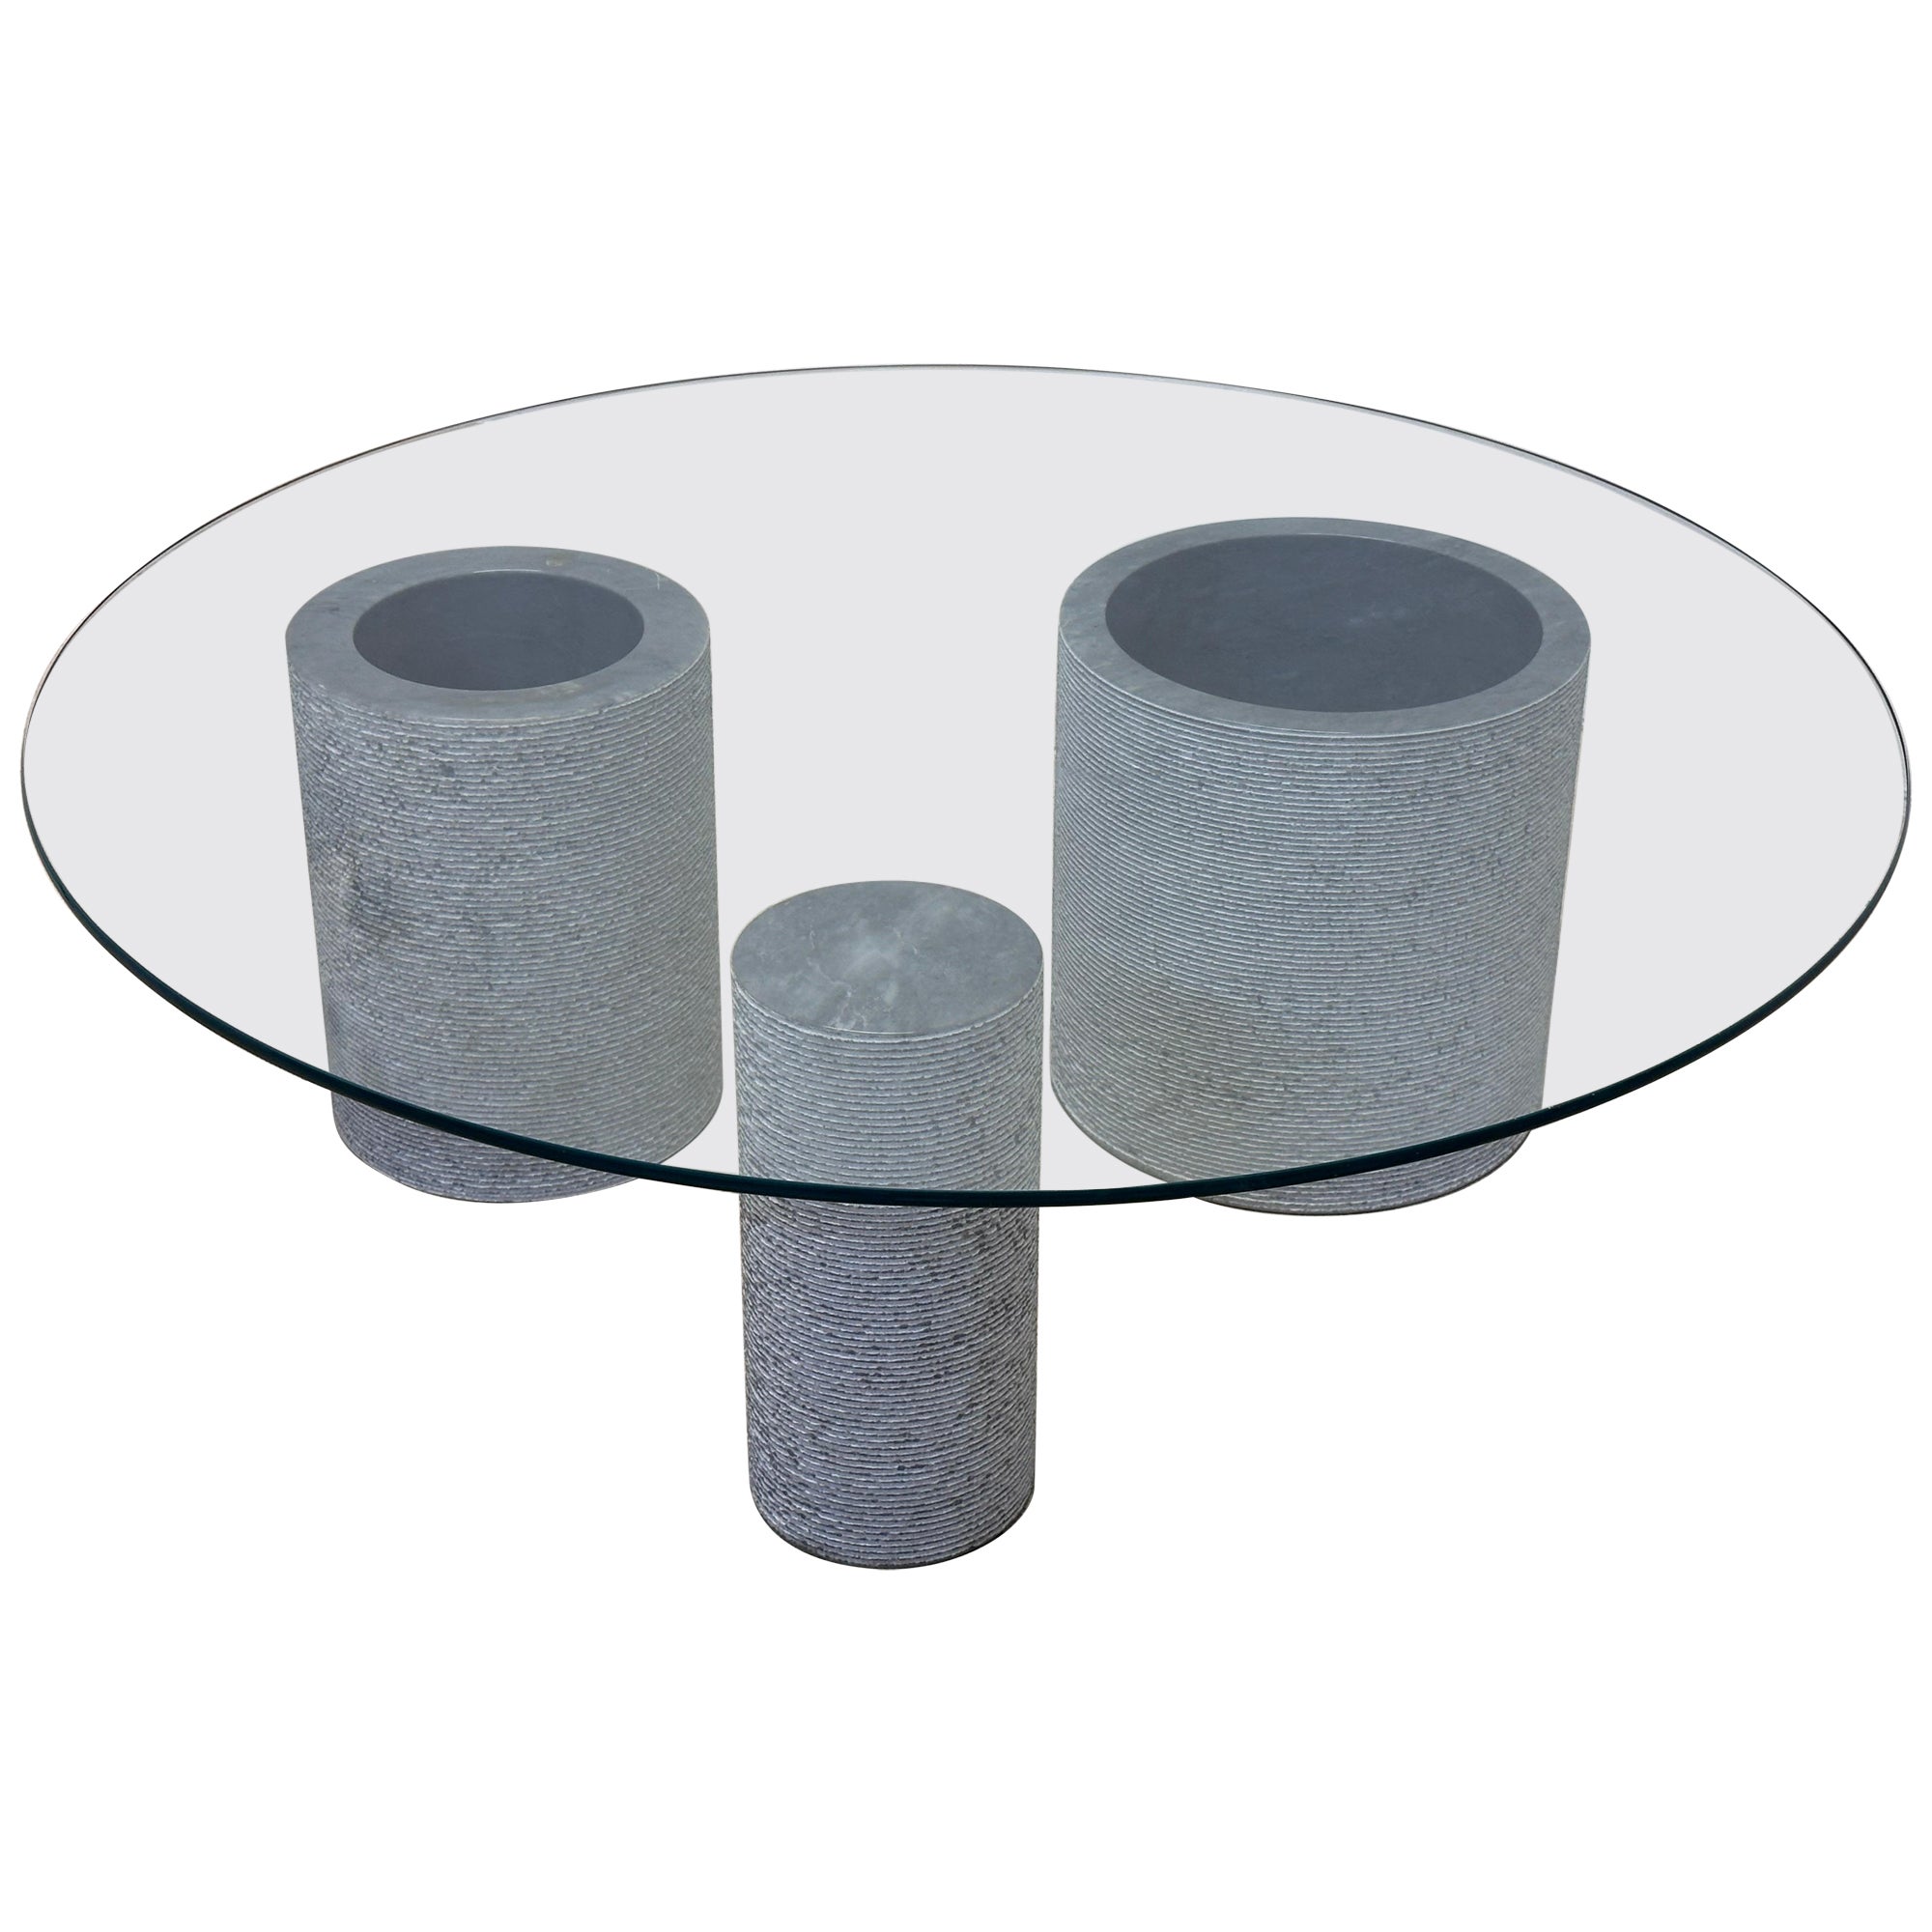 Giulio Lazzotti “Of One, Three Designs” Marble Coffee Table For Casigliani Italy